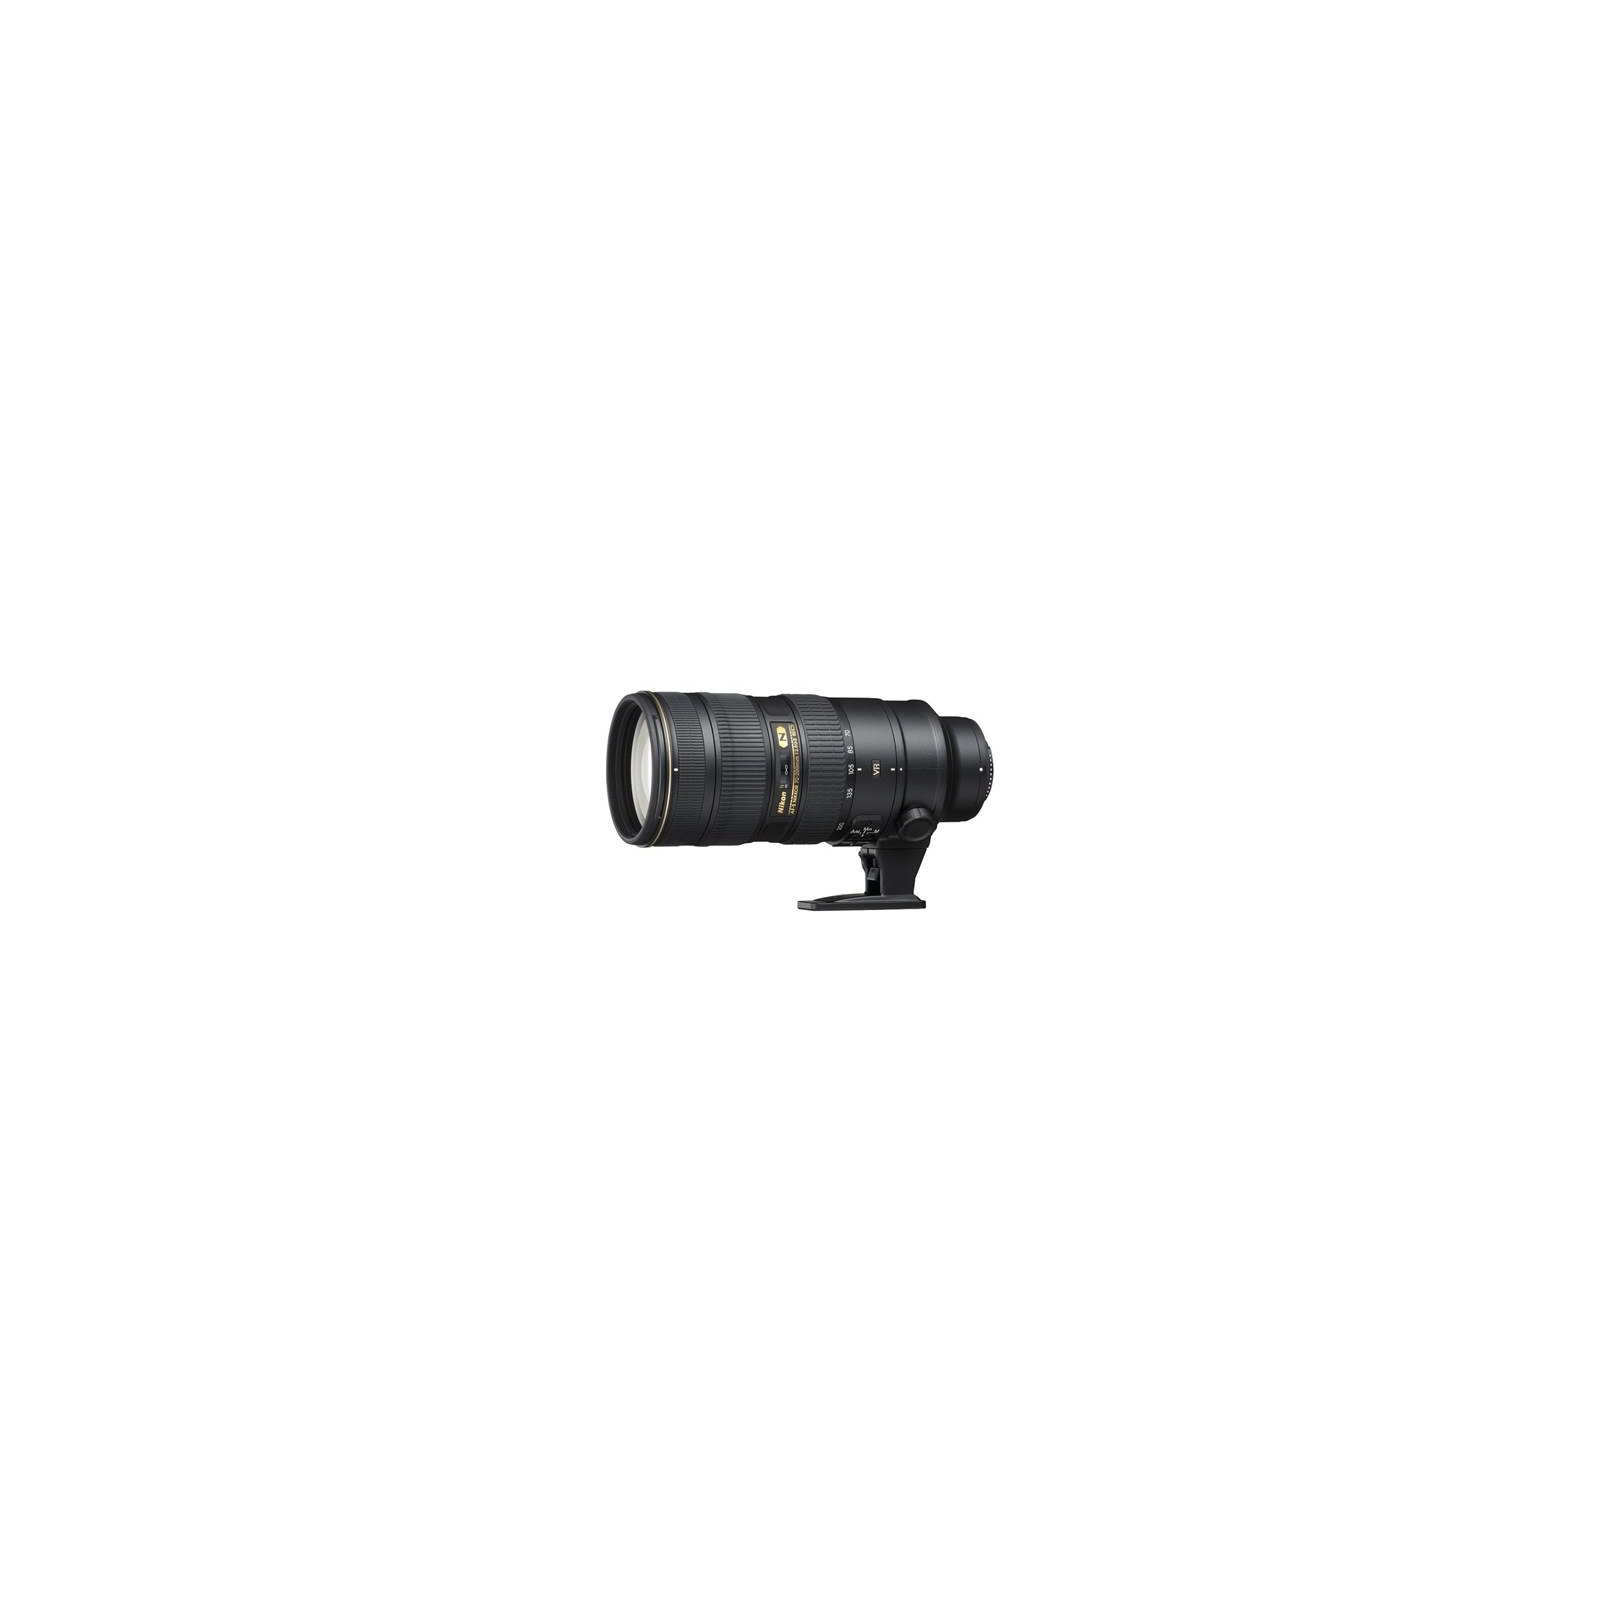 Объектив Nikon AF-S 70-200mm f/2.8G IF-ED VR II (JAA807DA)